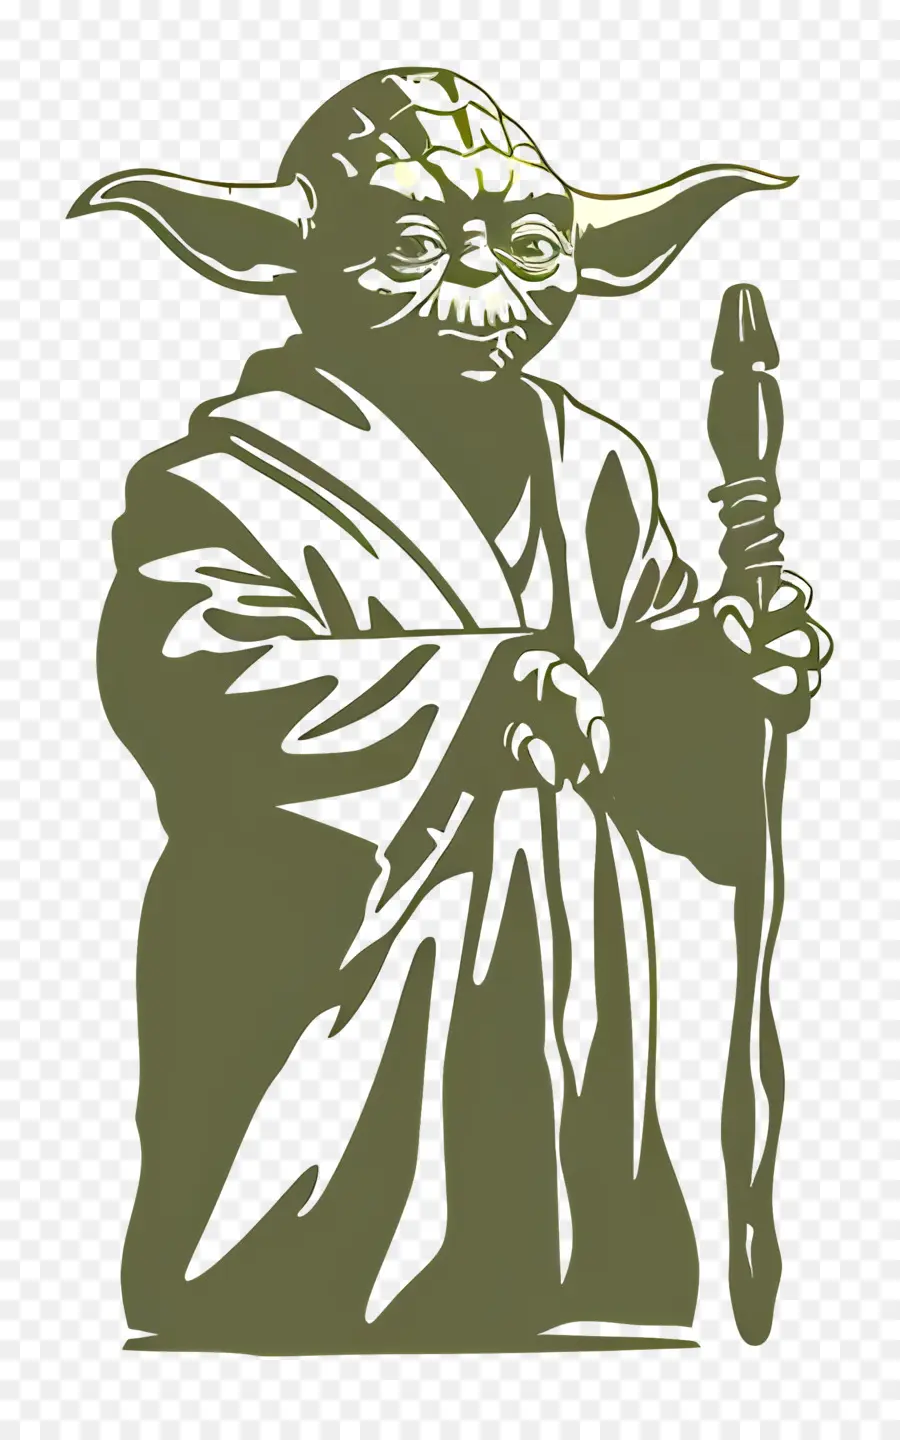 Star Wars - Yoda -Figur in Grün mit Stock